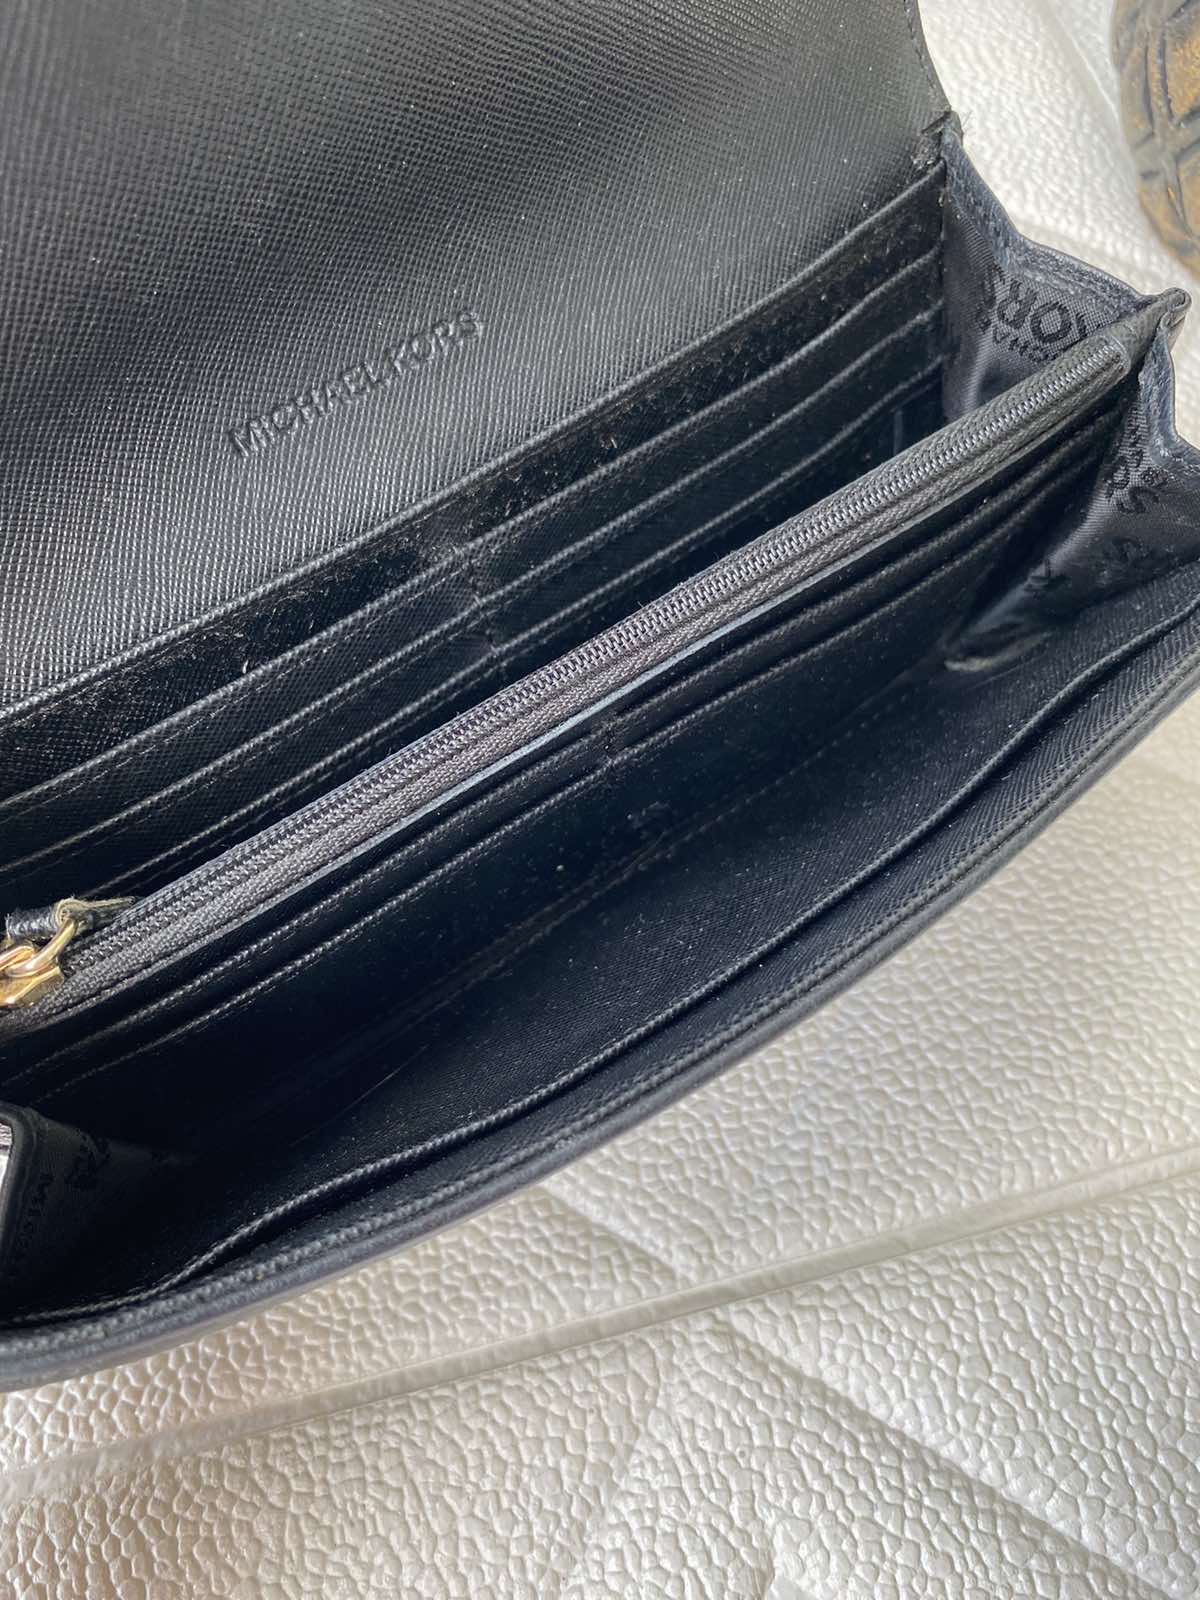 Michael Kors Black Leather Long Wallet. – Canon E-Bags Prime